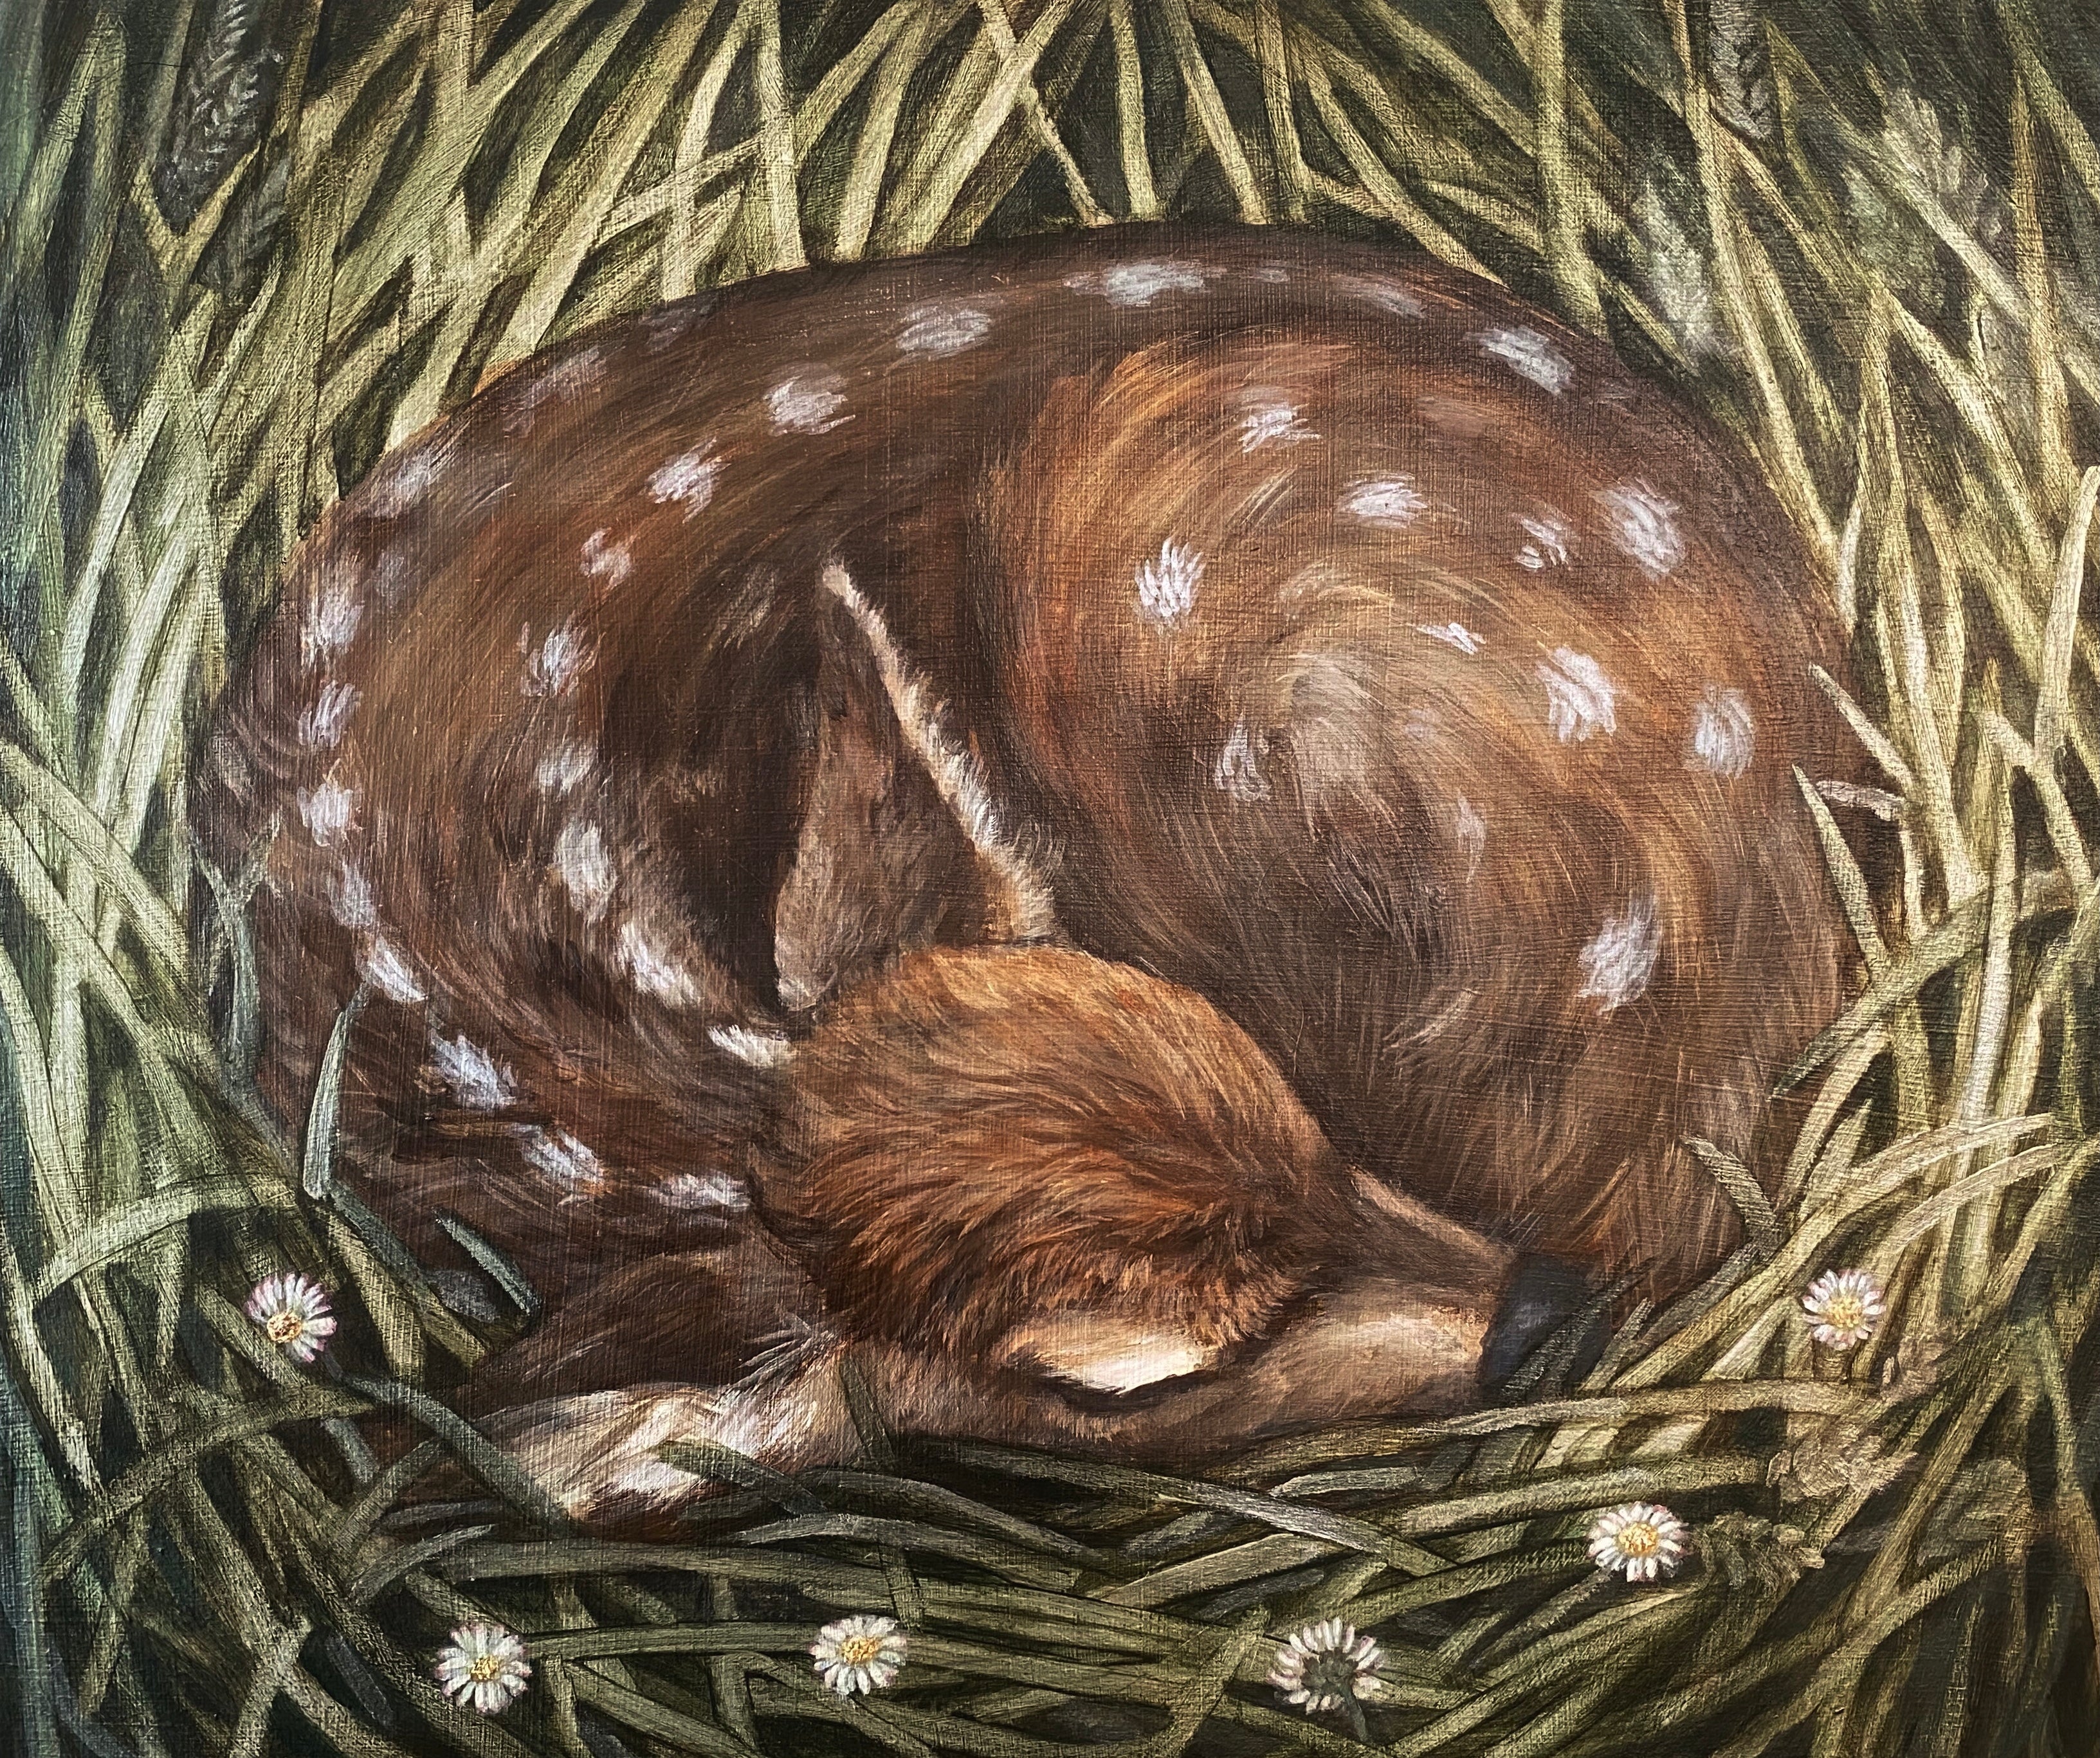 "daisy' artwork by Saskia Gray.  Baby deer sleeping in grass and daisies